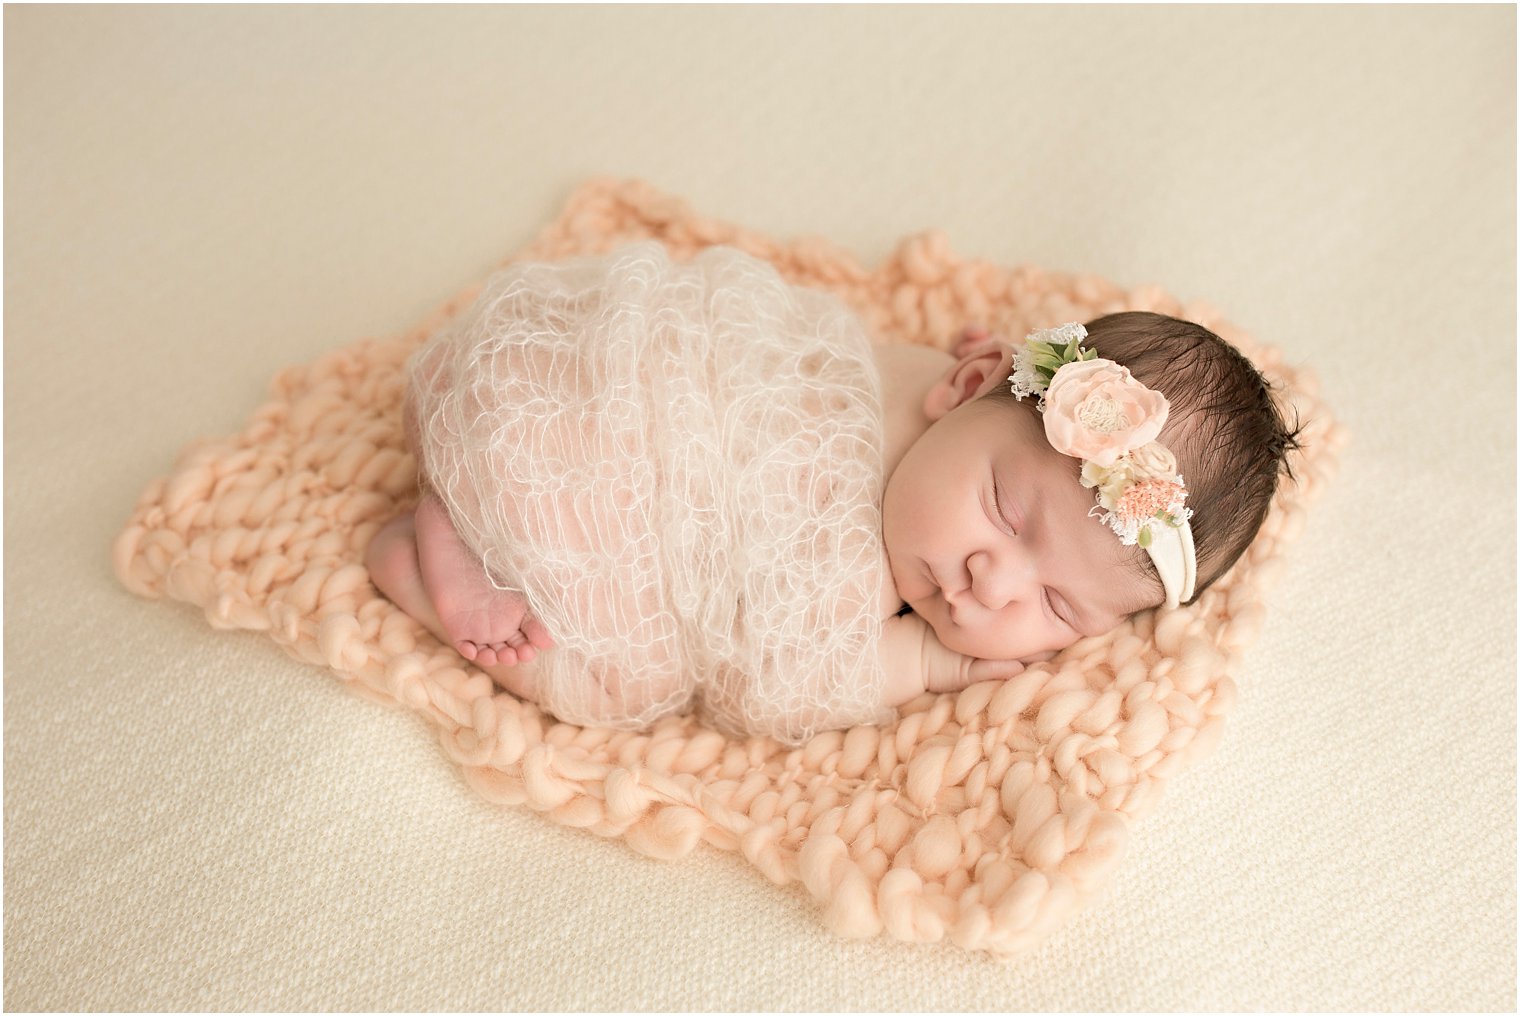 Sleepy newborn girl in peach and cream